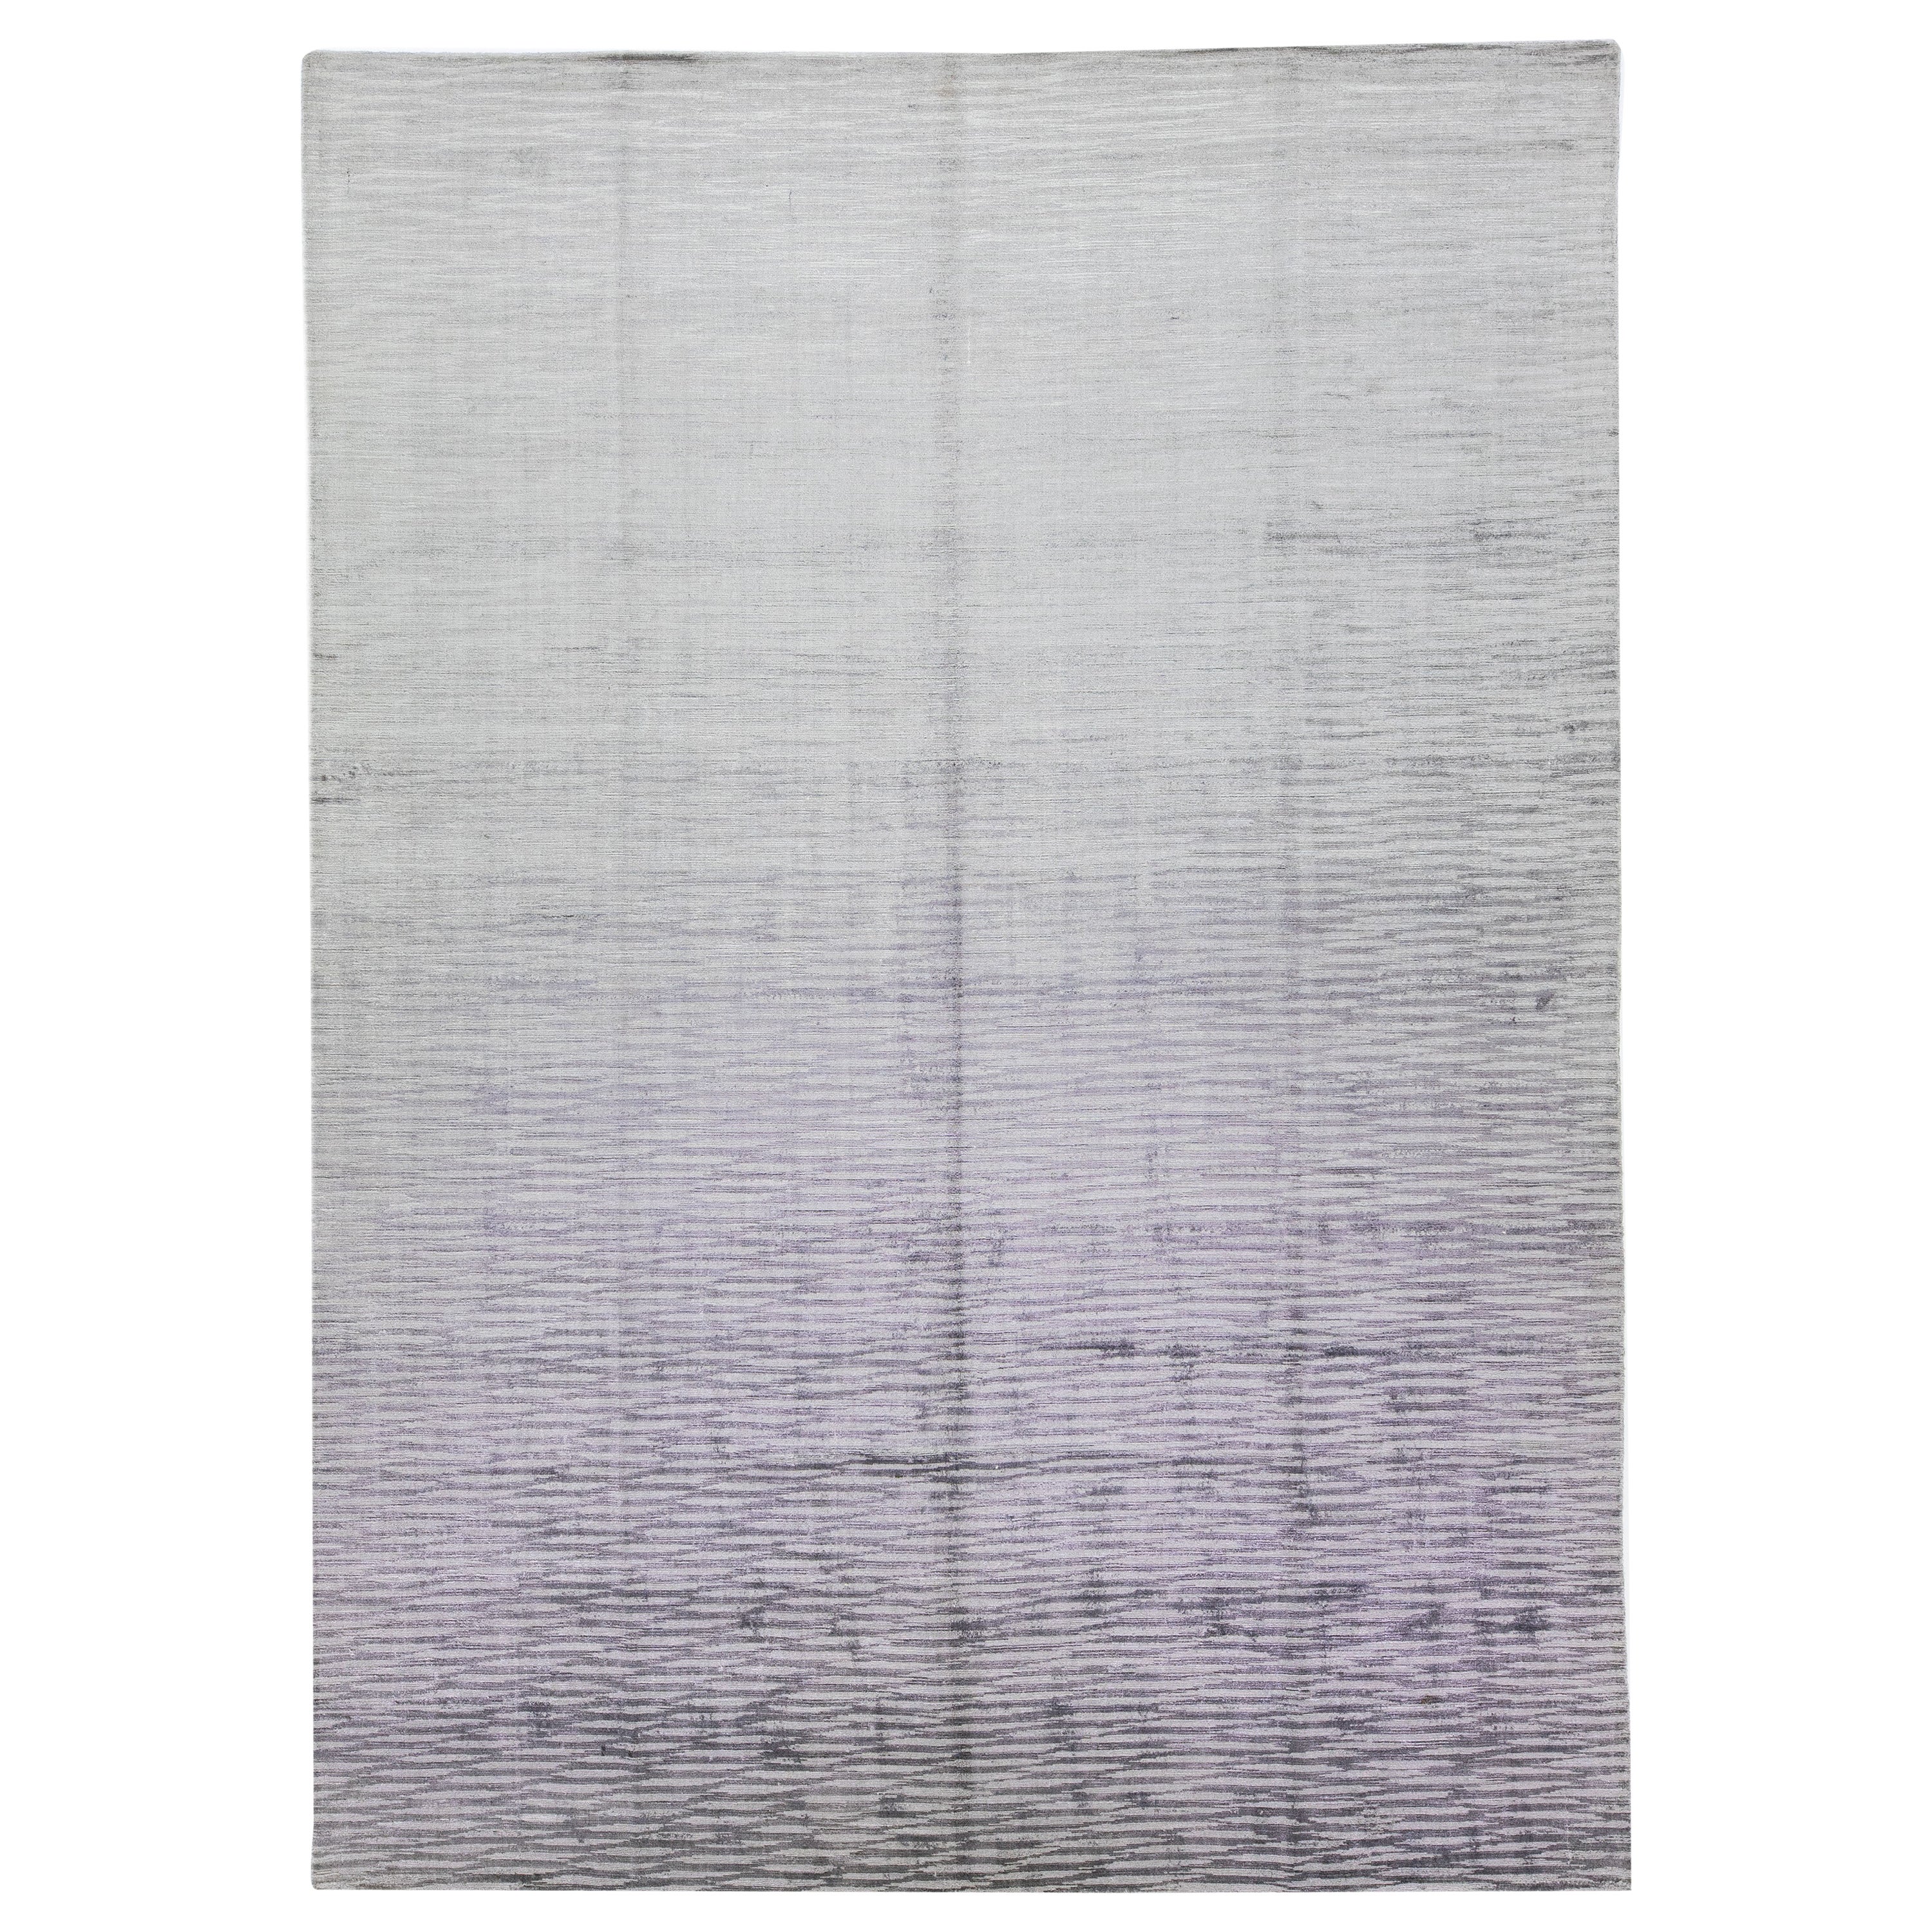 Handmade Modern Wool & Silk Rug with Gray-Silver Abstract Motif 